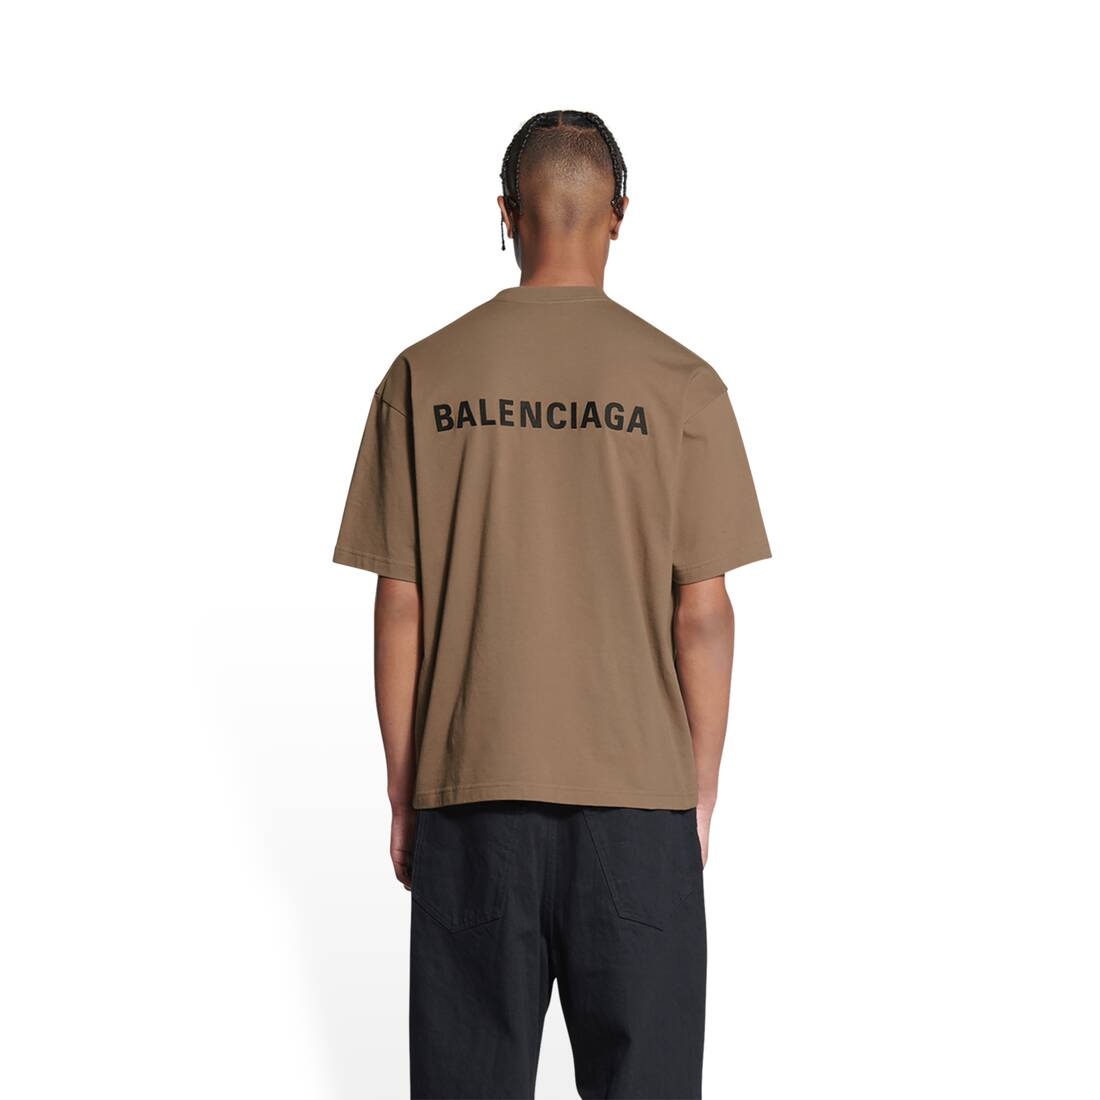 Bóveda camuflaje Fascinar Men's Balenciaga T-shirt Regular Fit in Beige | Balenciaga US